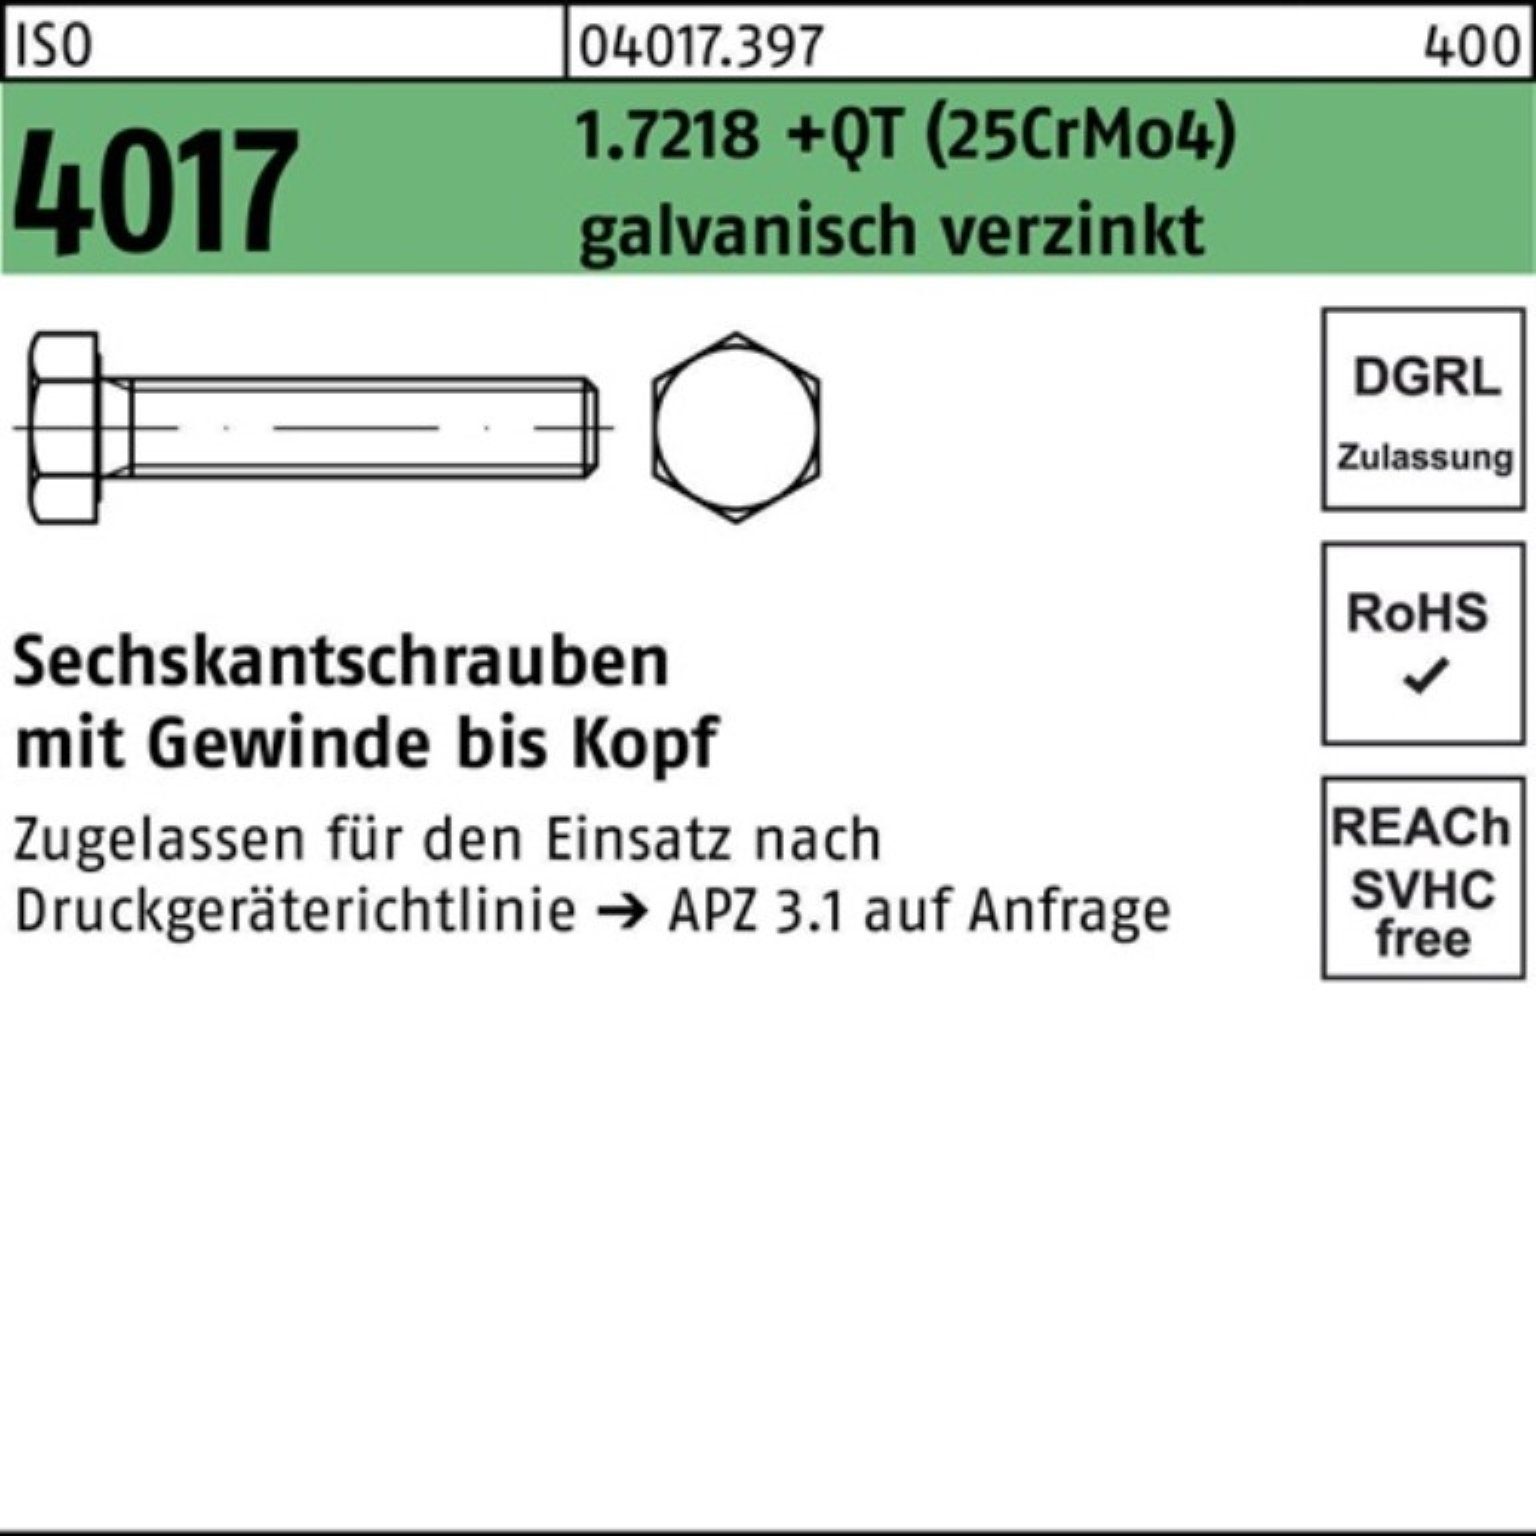 Sechskantschraube Bufab Sechskantschraube +QT 1.7218 4017 M33x120 ISO VG (25CrMo4) Pack 100er